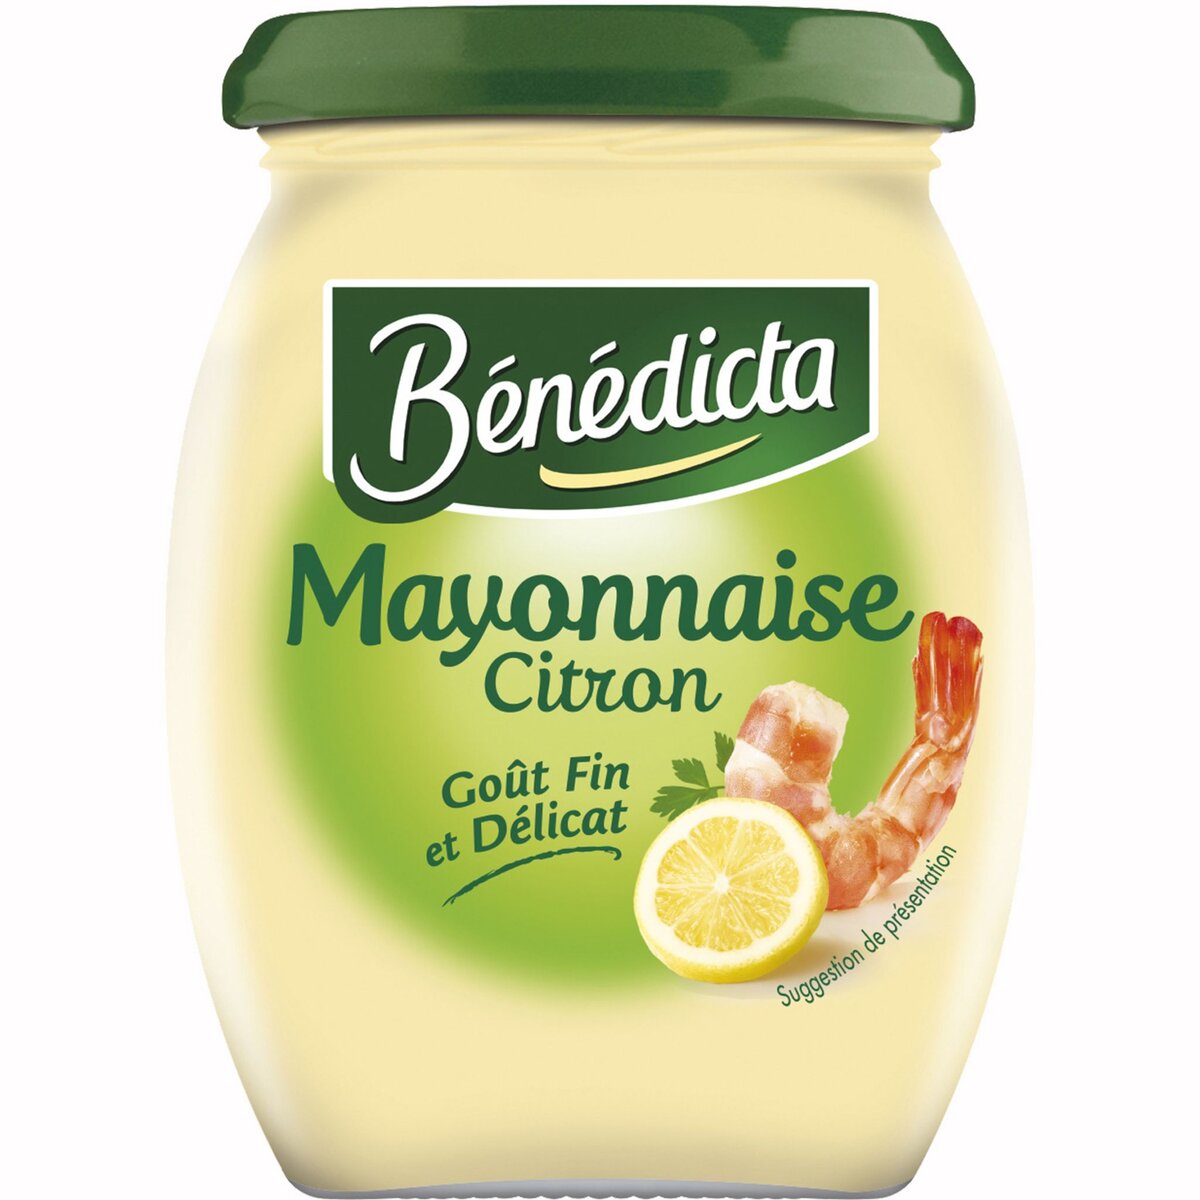 BENEDICTA Mayonnaise citron goût fin et délicat en bocal 255g